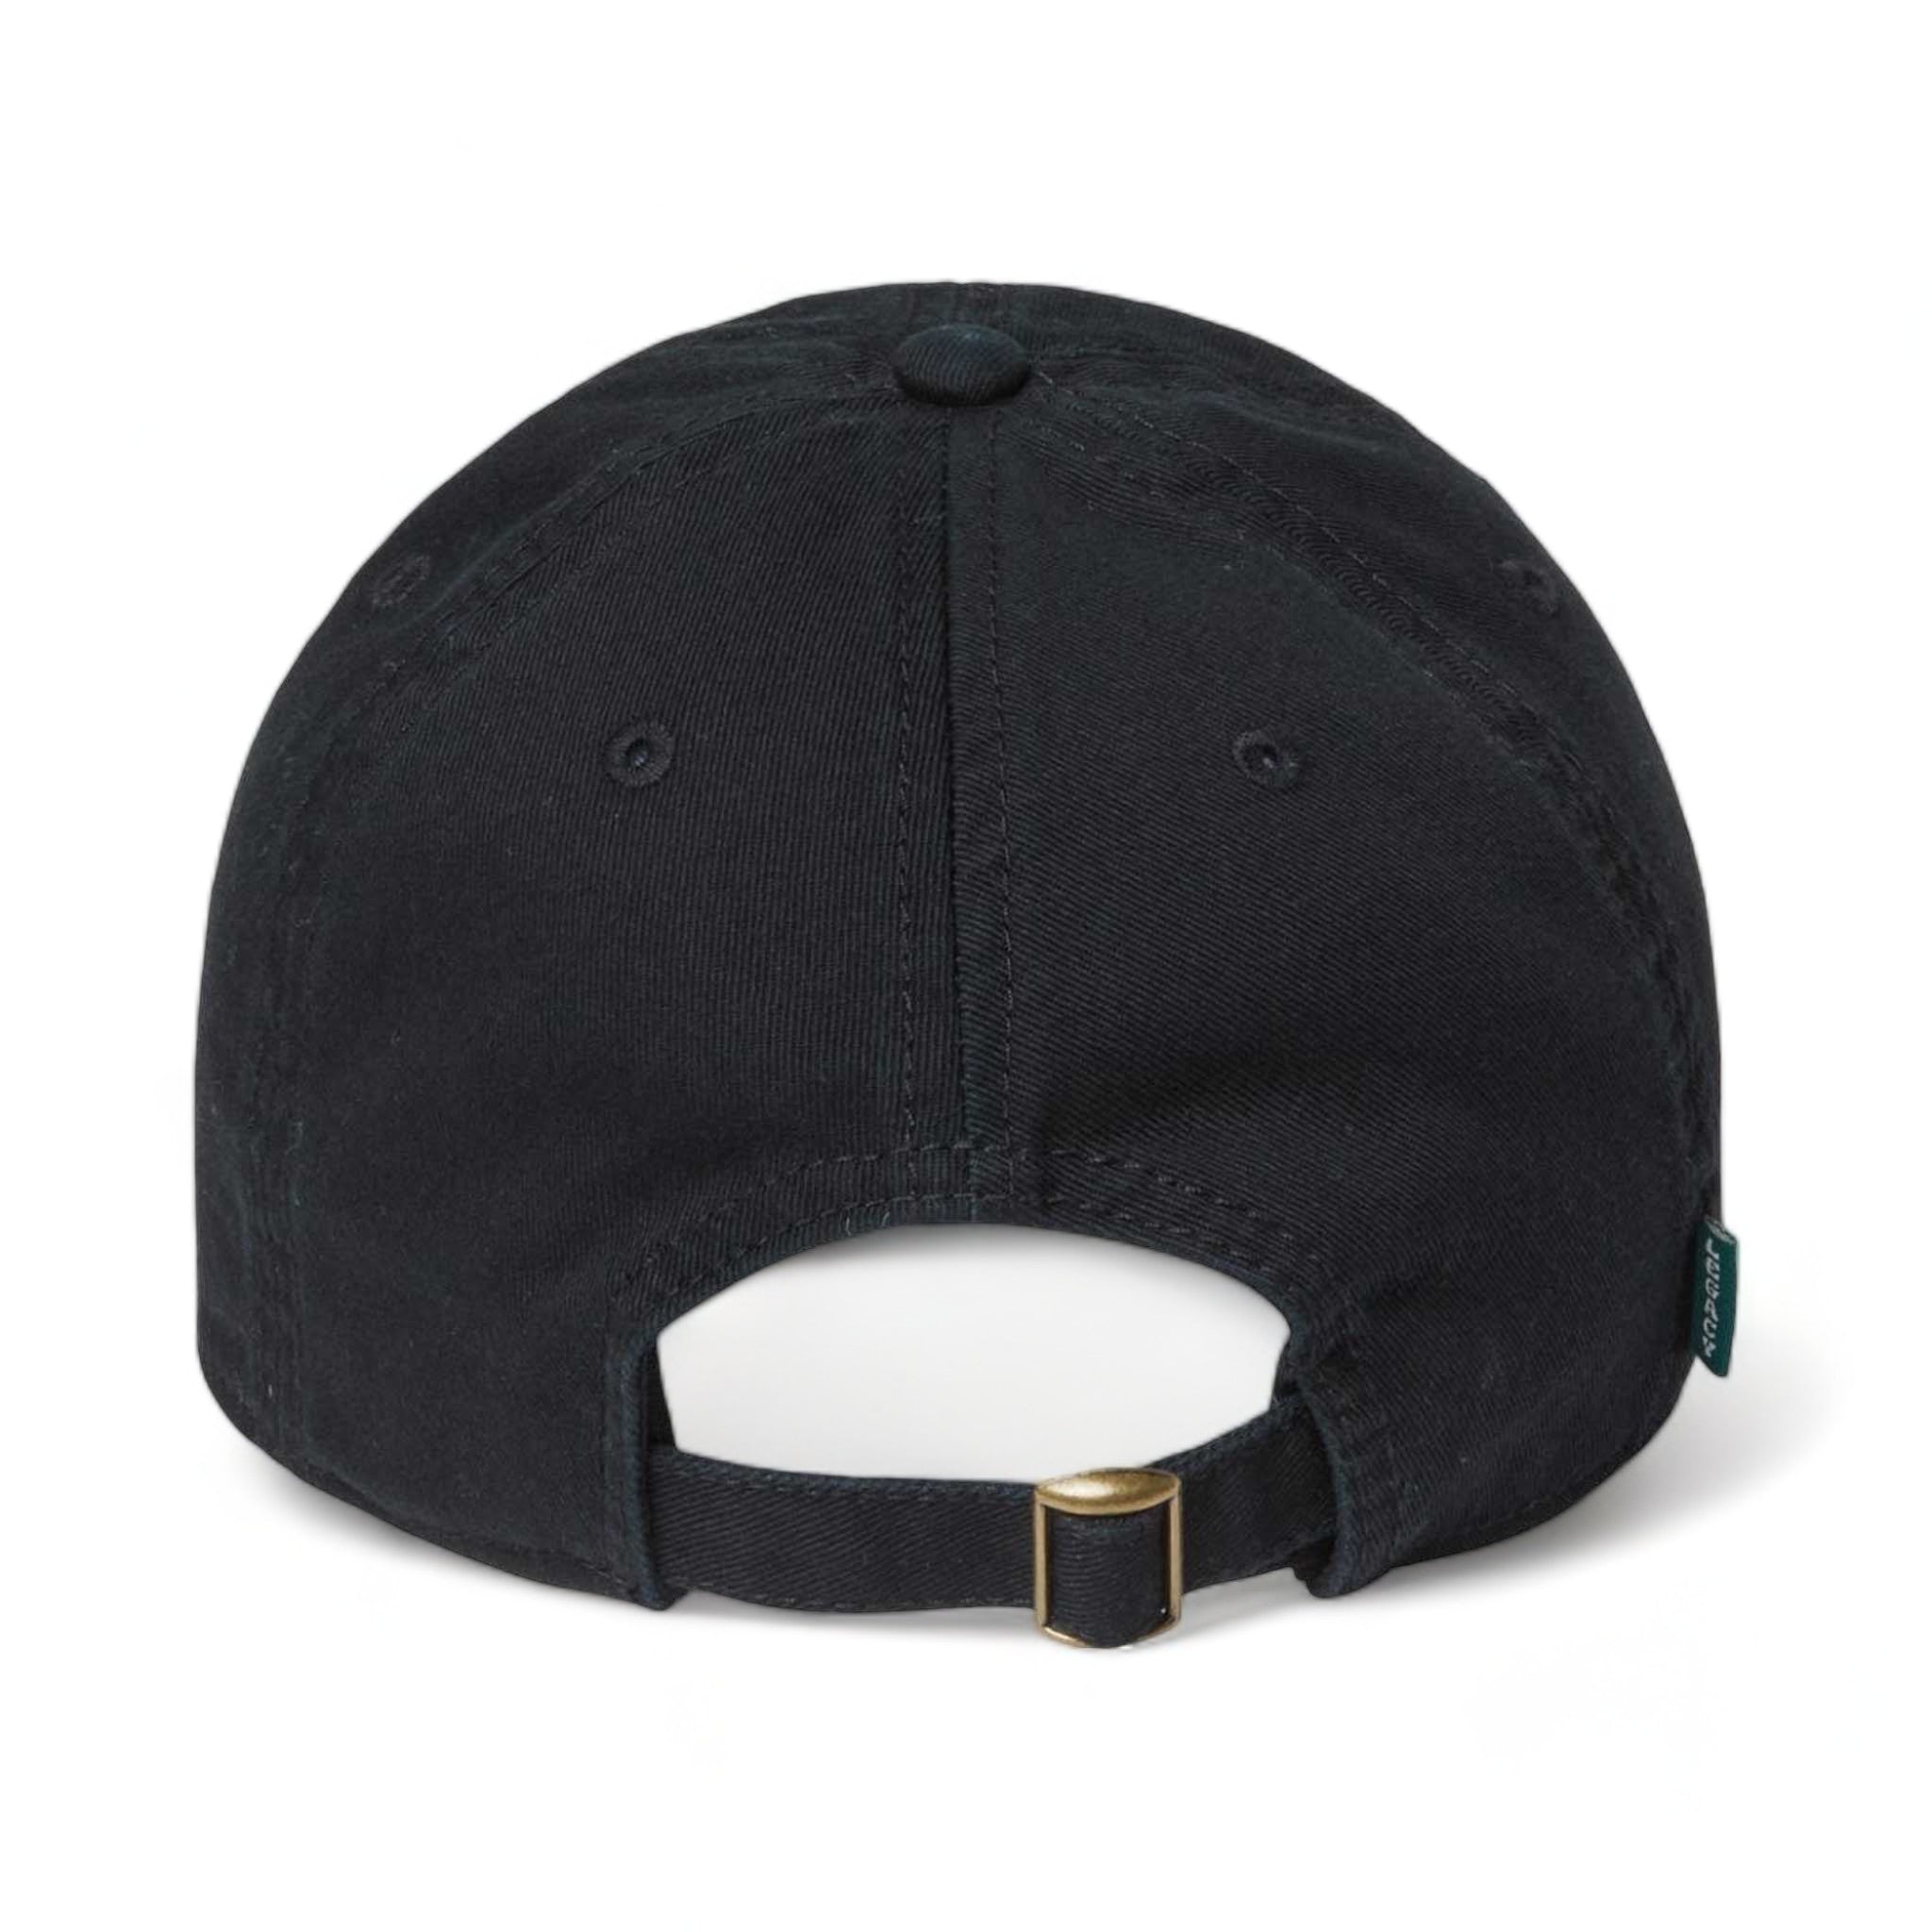 Back view of LEGACY EZA custom hat in black